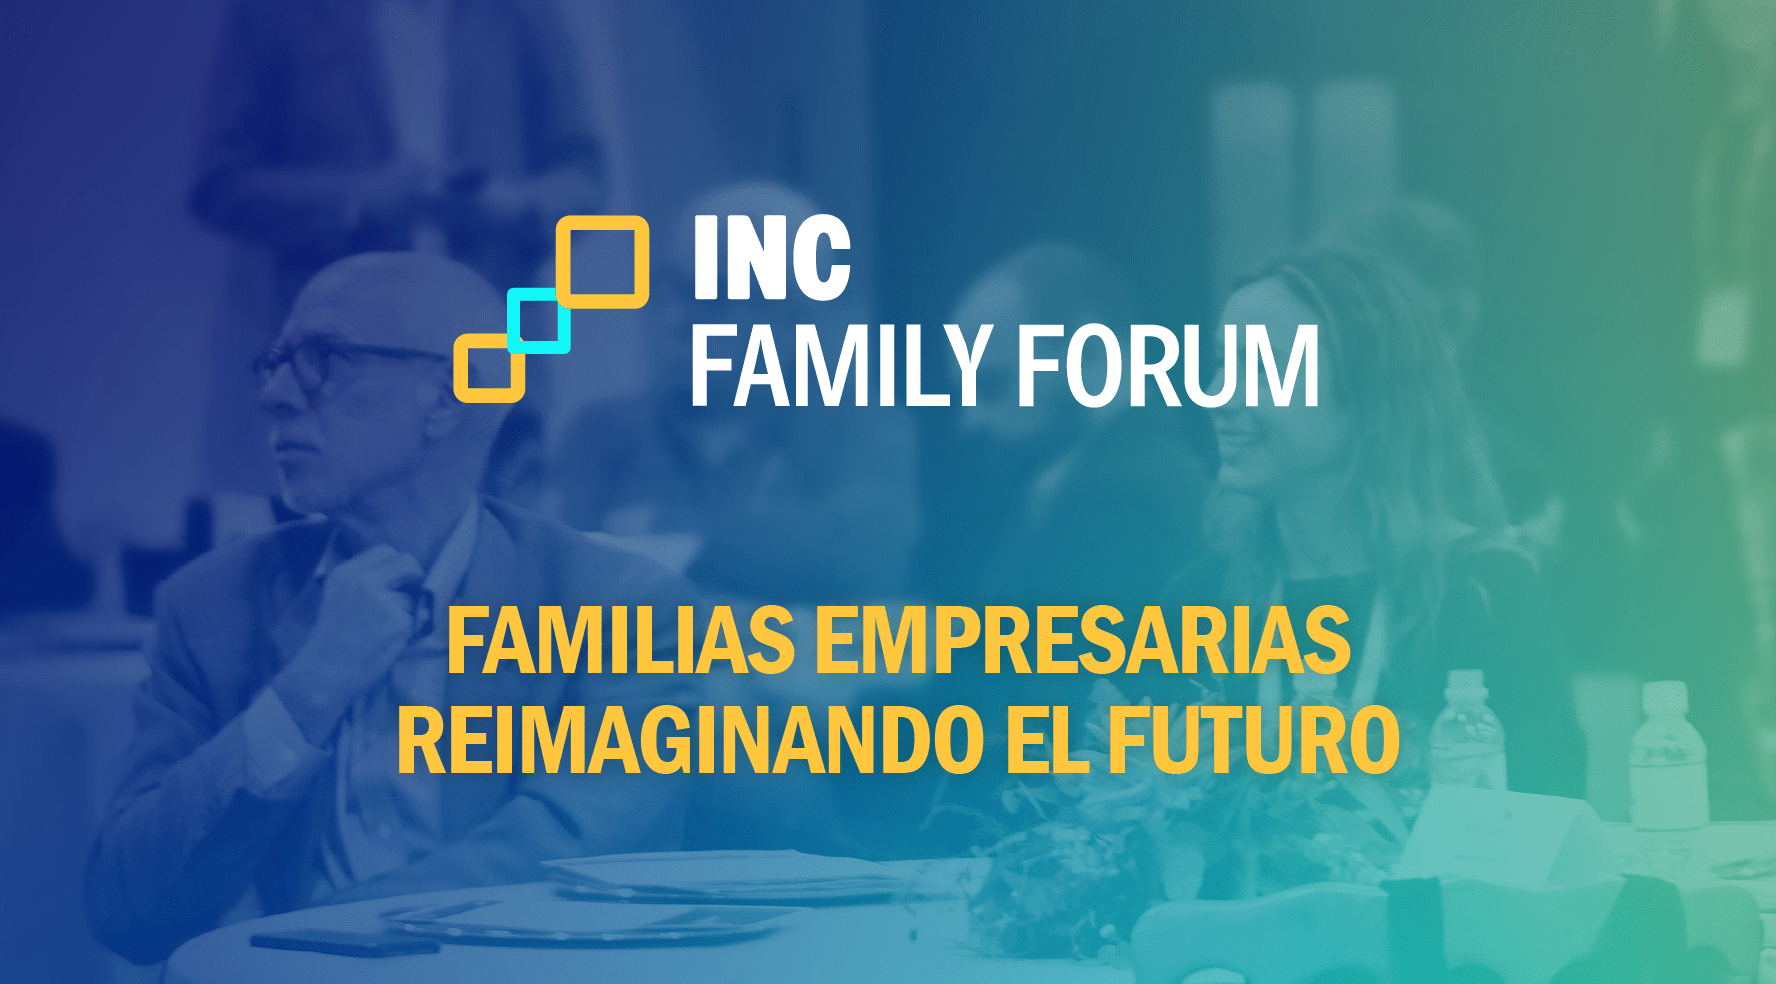 INC Family Forum